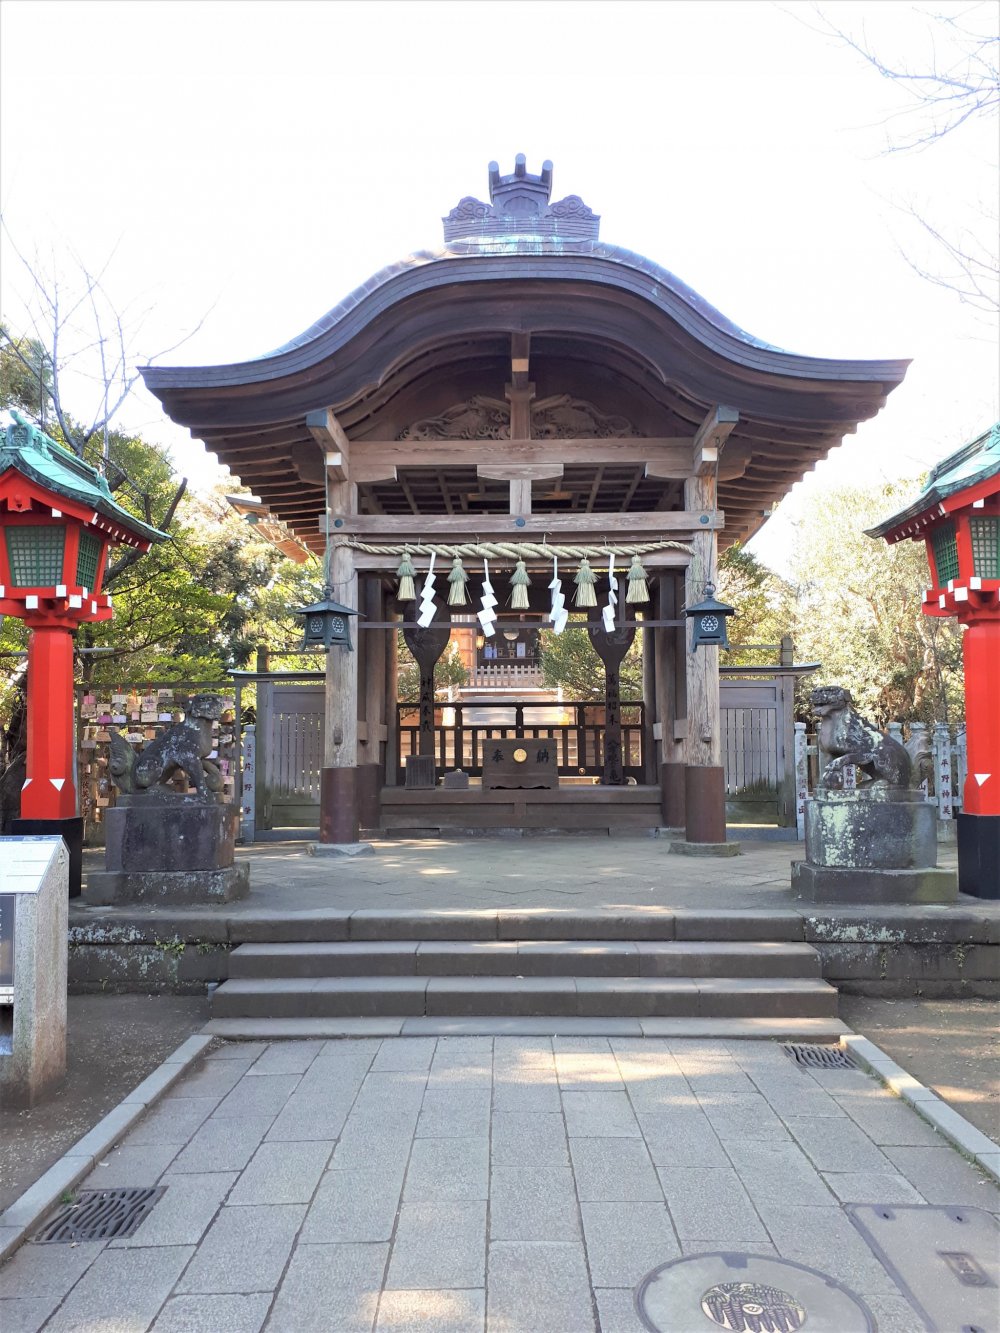 Okutsu no Miya, the original shrine of the island